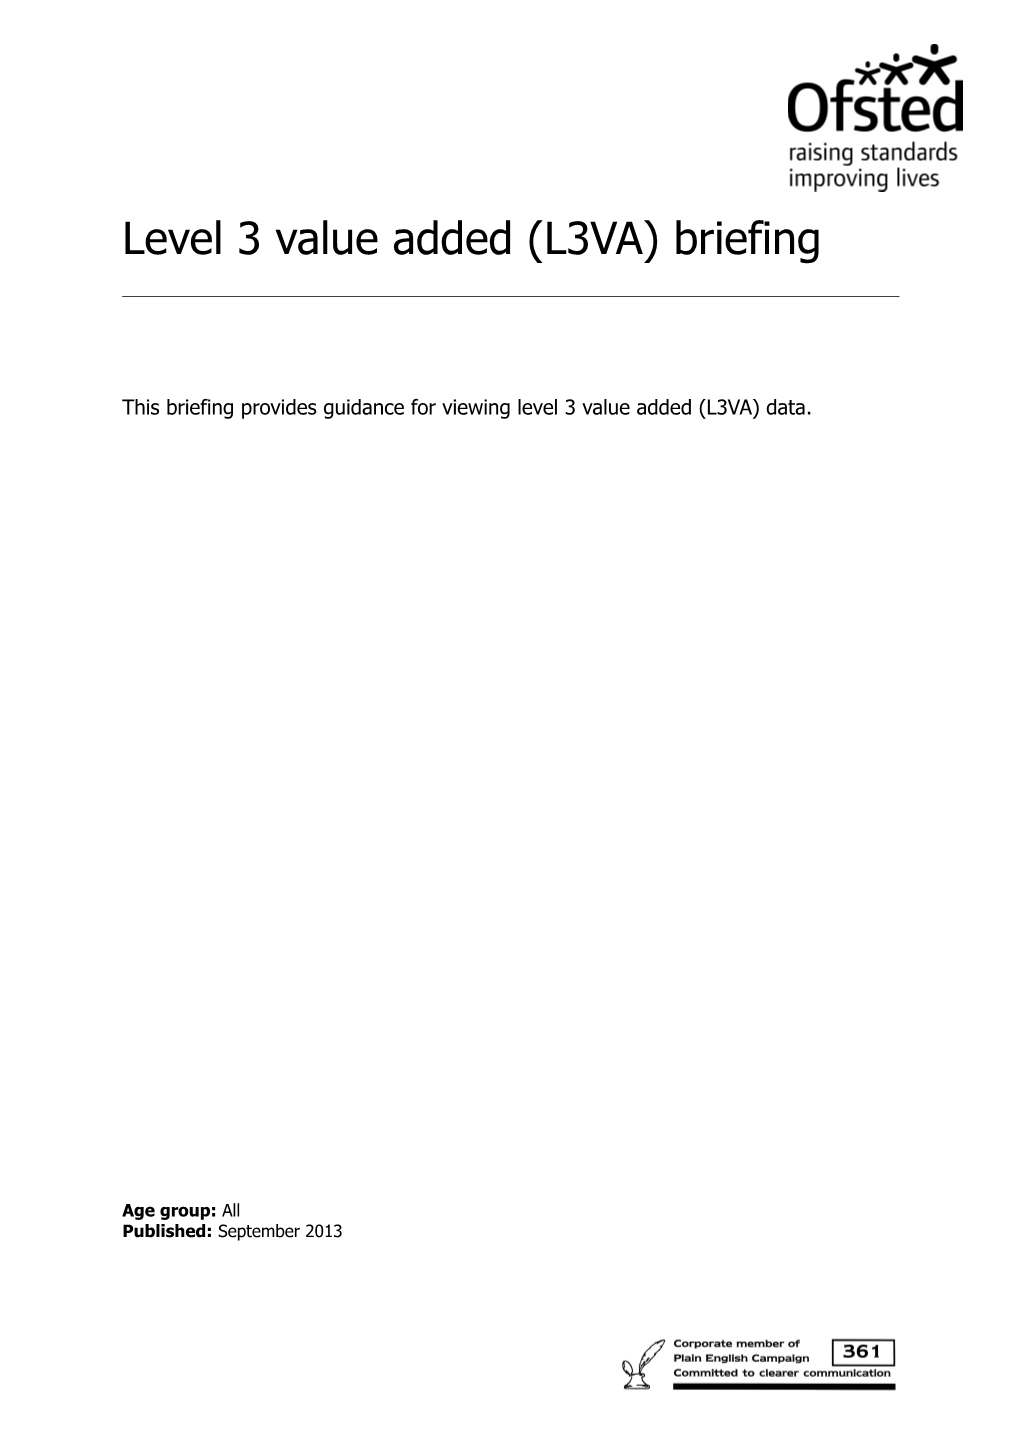 Level 3 Value Added (L3VA) Briefing